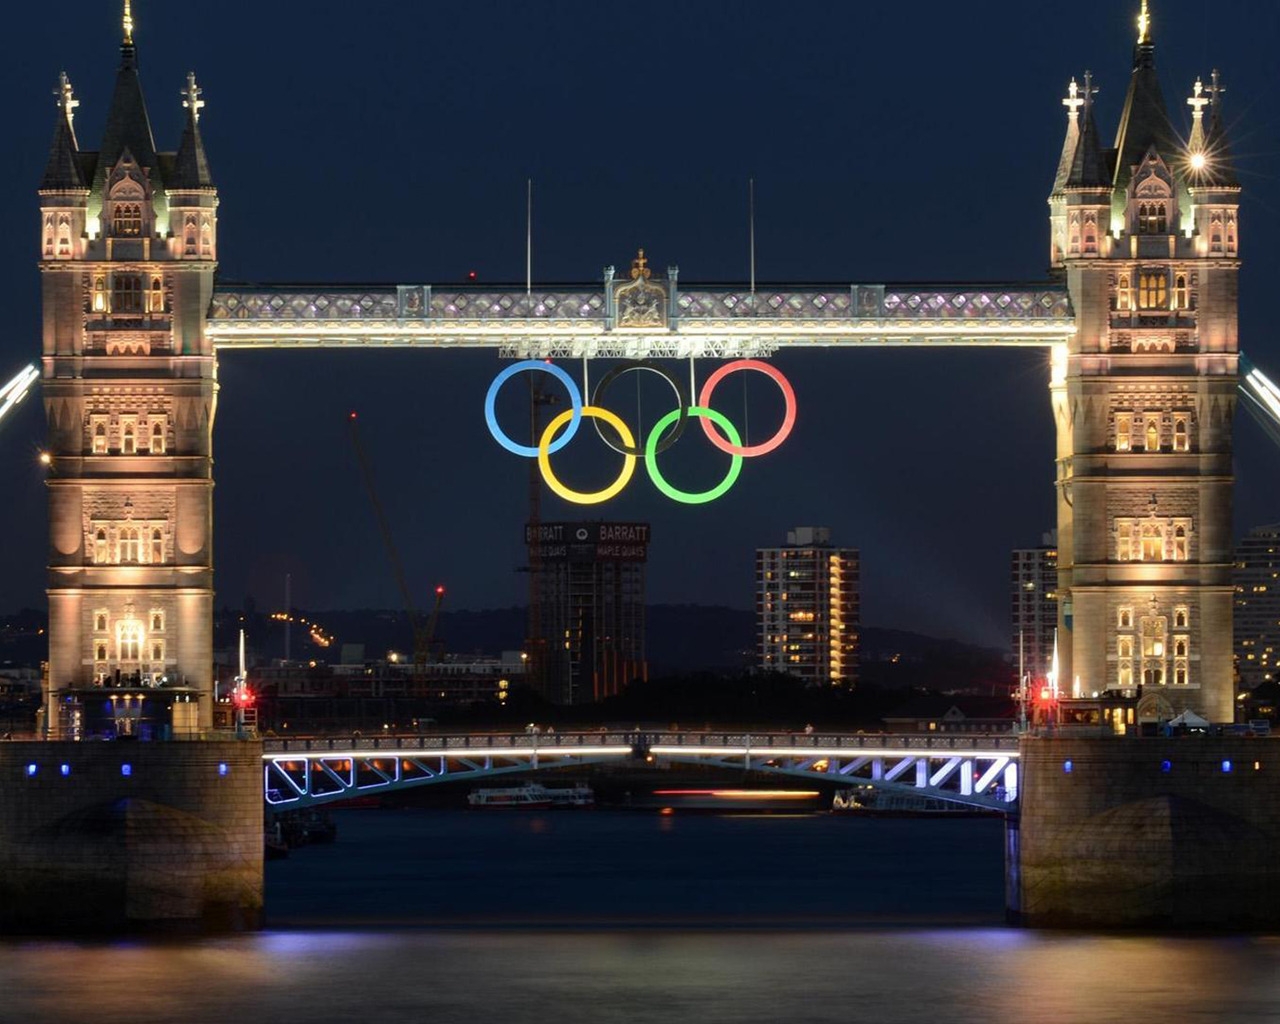 London Bridge 2012 Olympics for 1280 x 1024 resolution